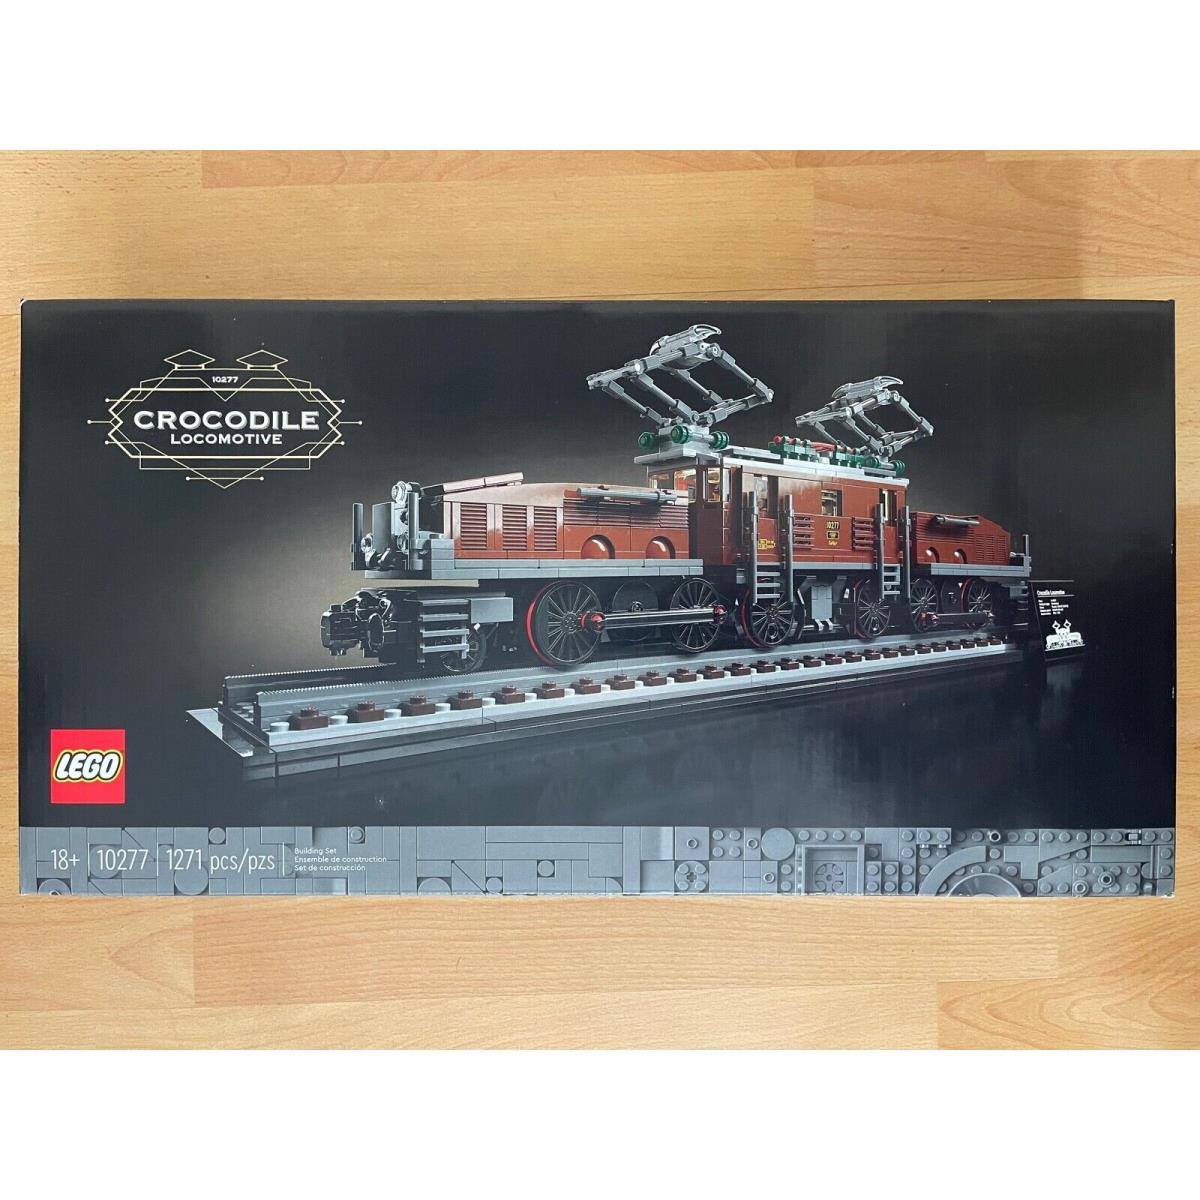 Lego Creator Expert Train 10277 Crocodile Locomotive Nisb